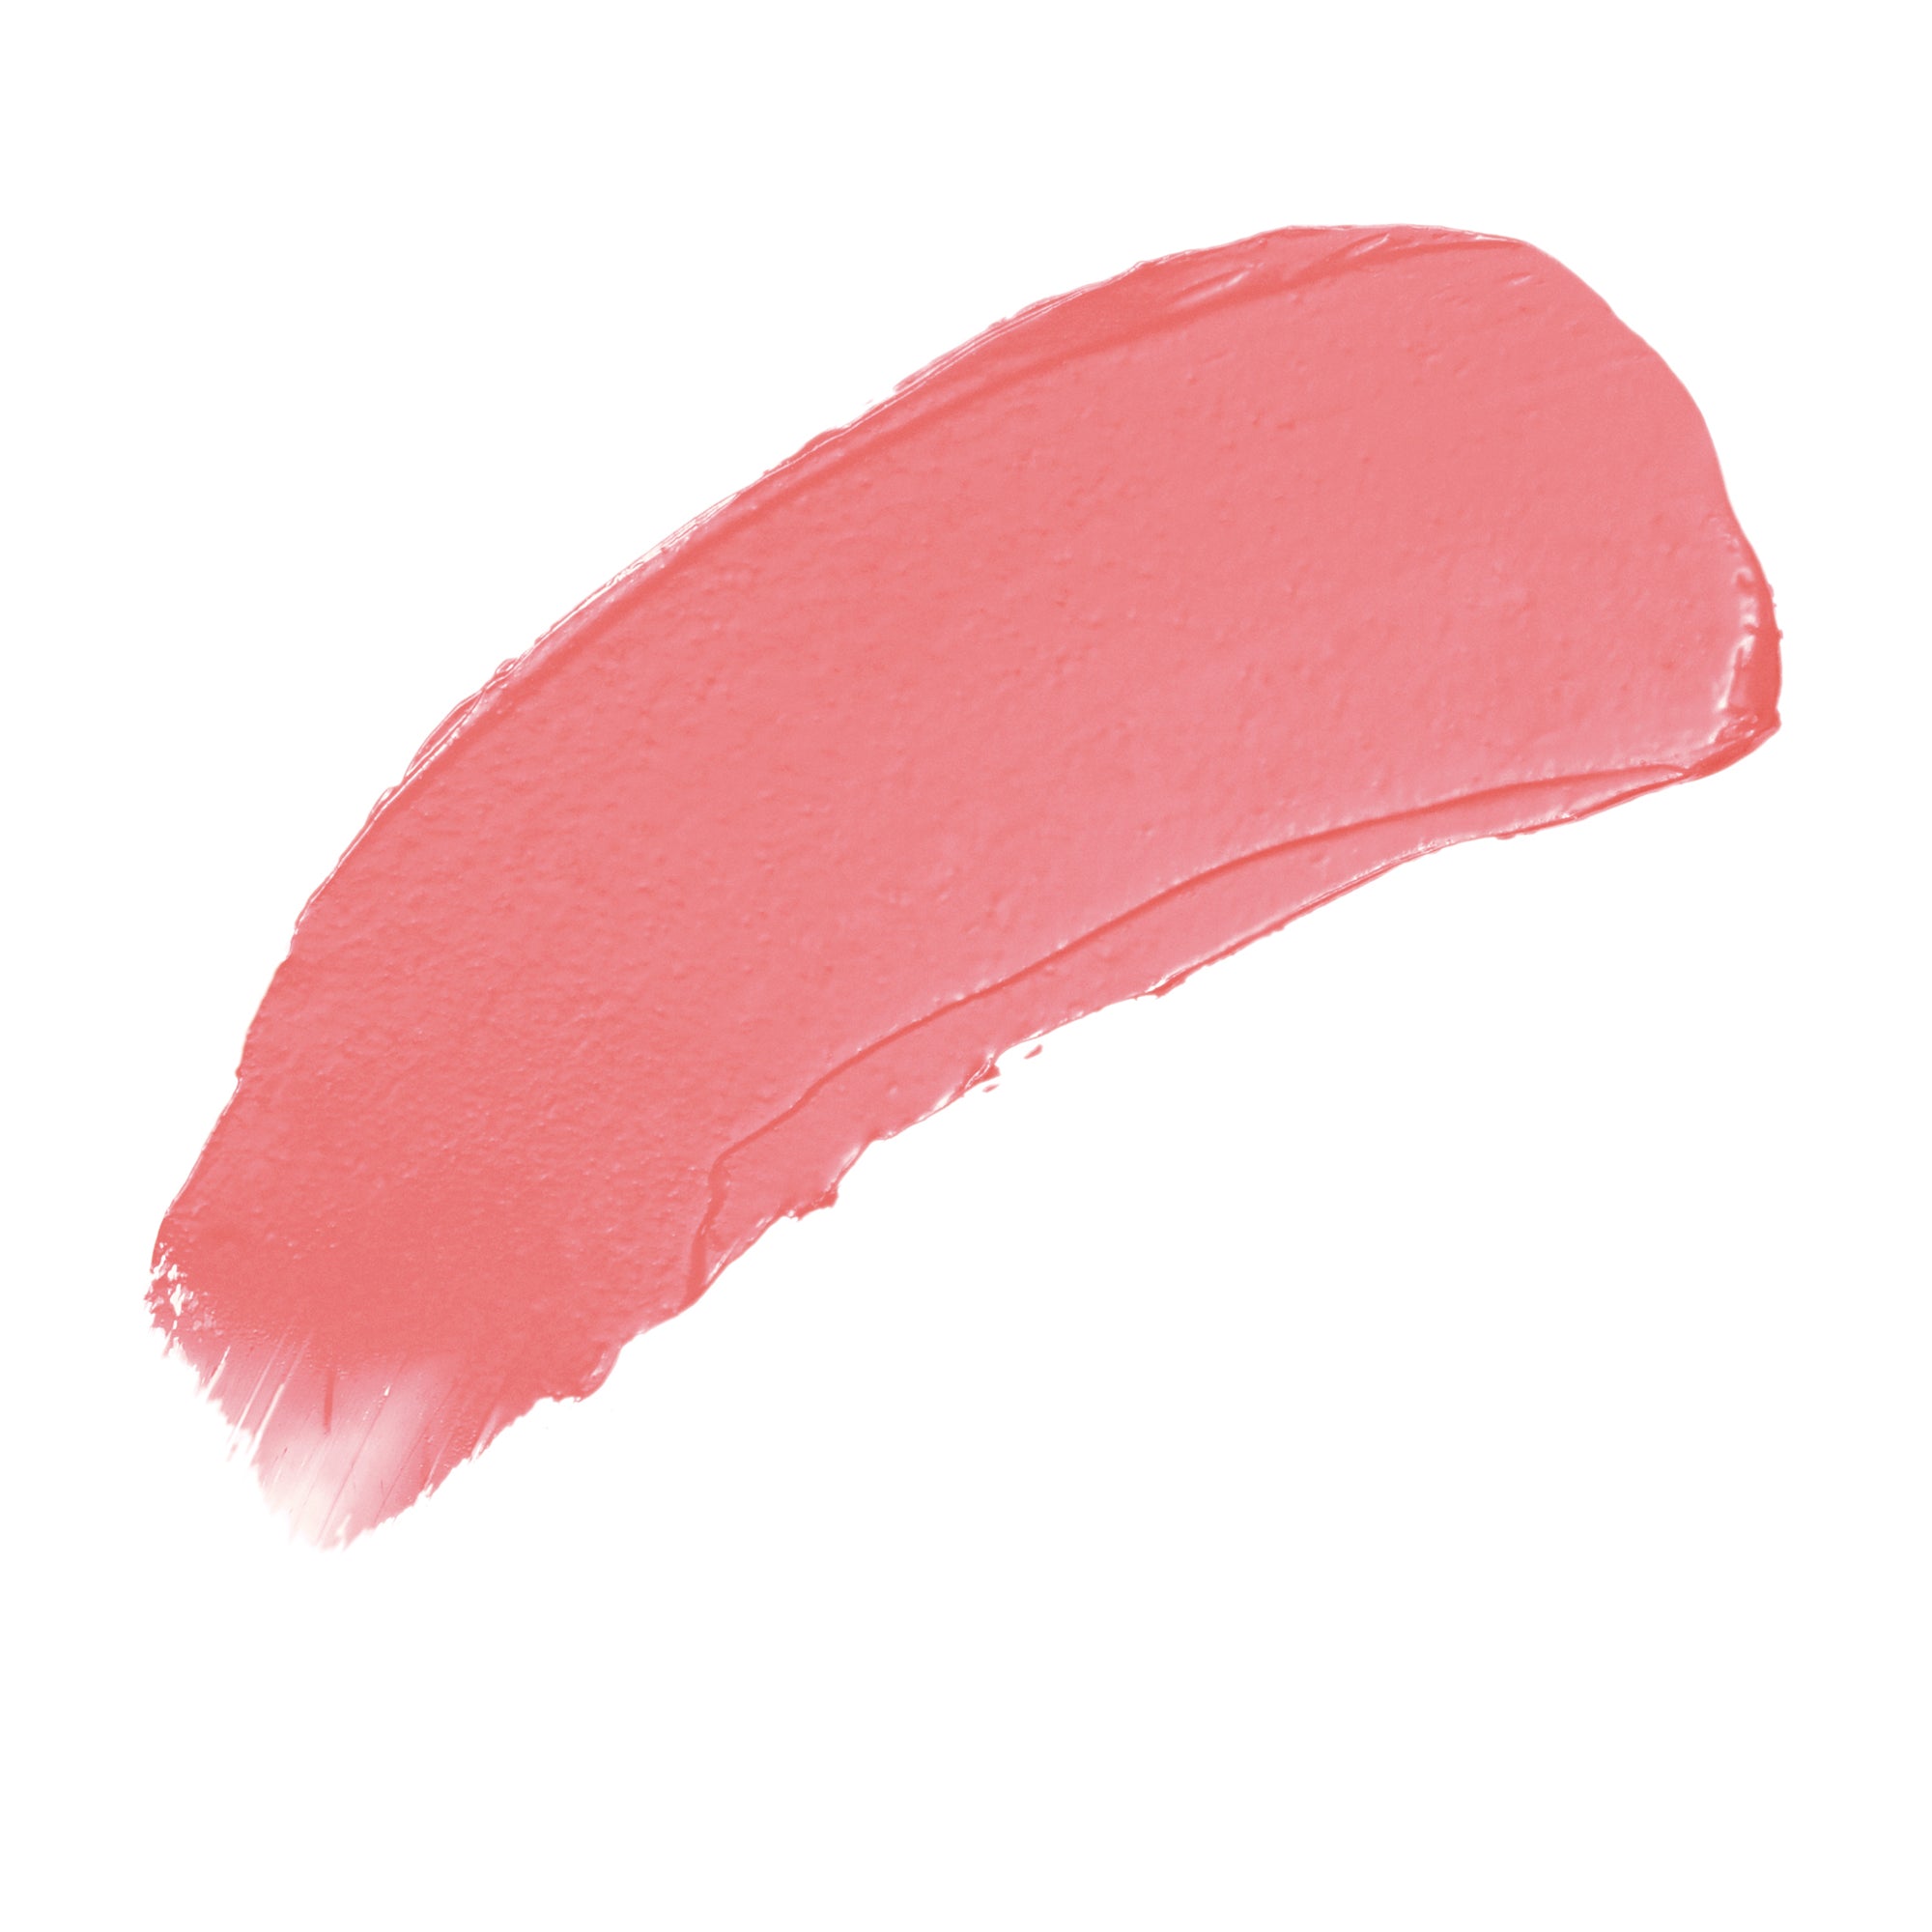 Jane Iredale Triple Luxe Long Lasting Naturally Moist Lipstick / SAKURE / Swatch